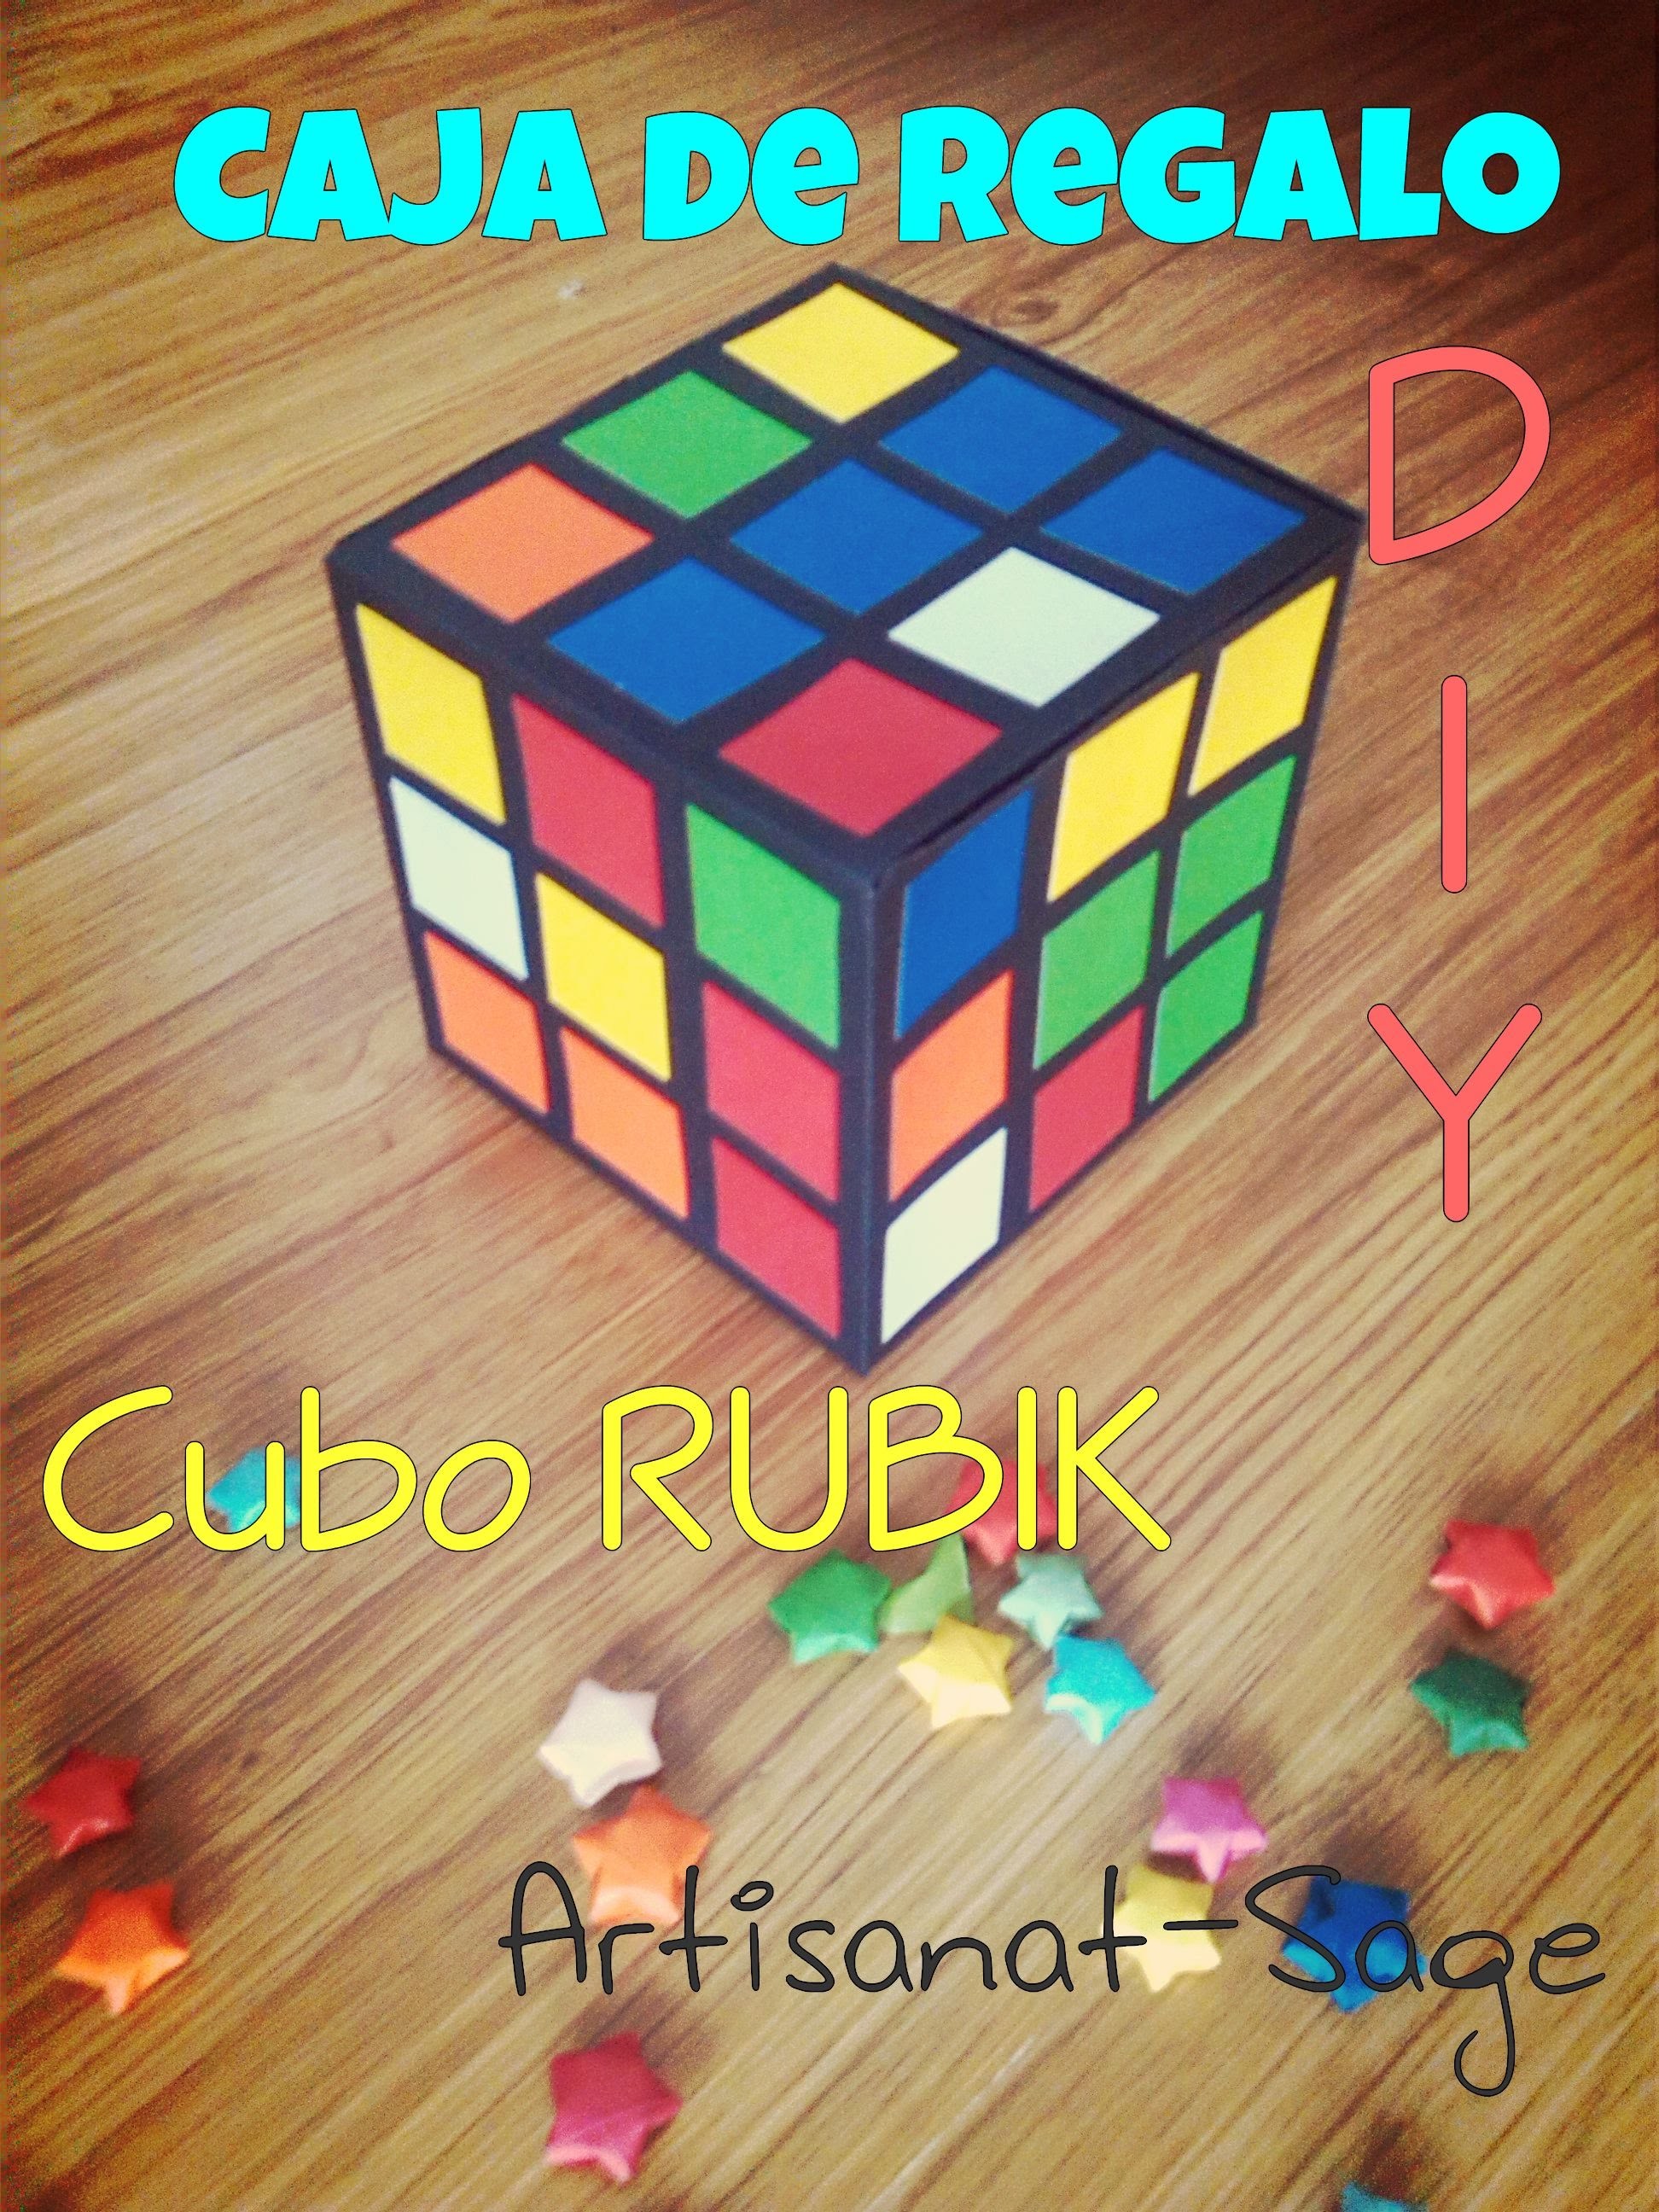 Caja de Regalo en forma de CUBO RUBIK -Rubik's cube-DIYComo hacer- How to